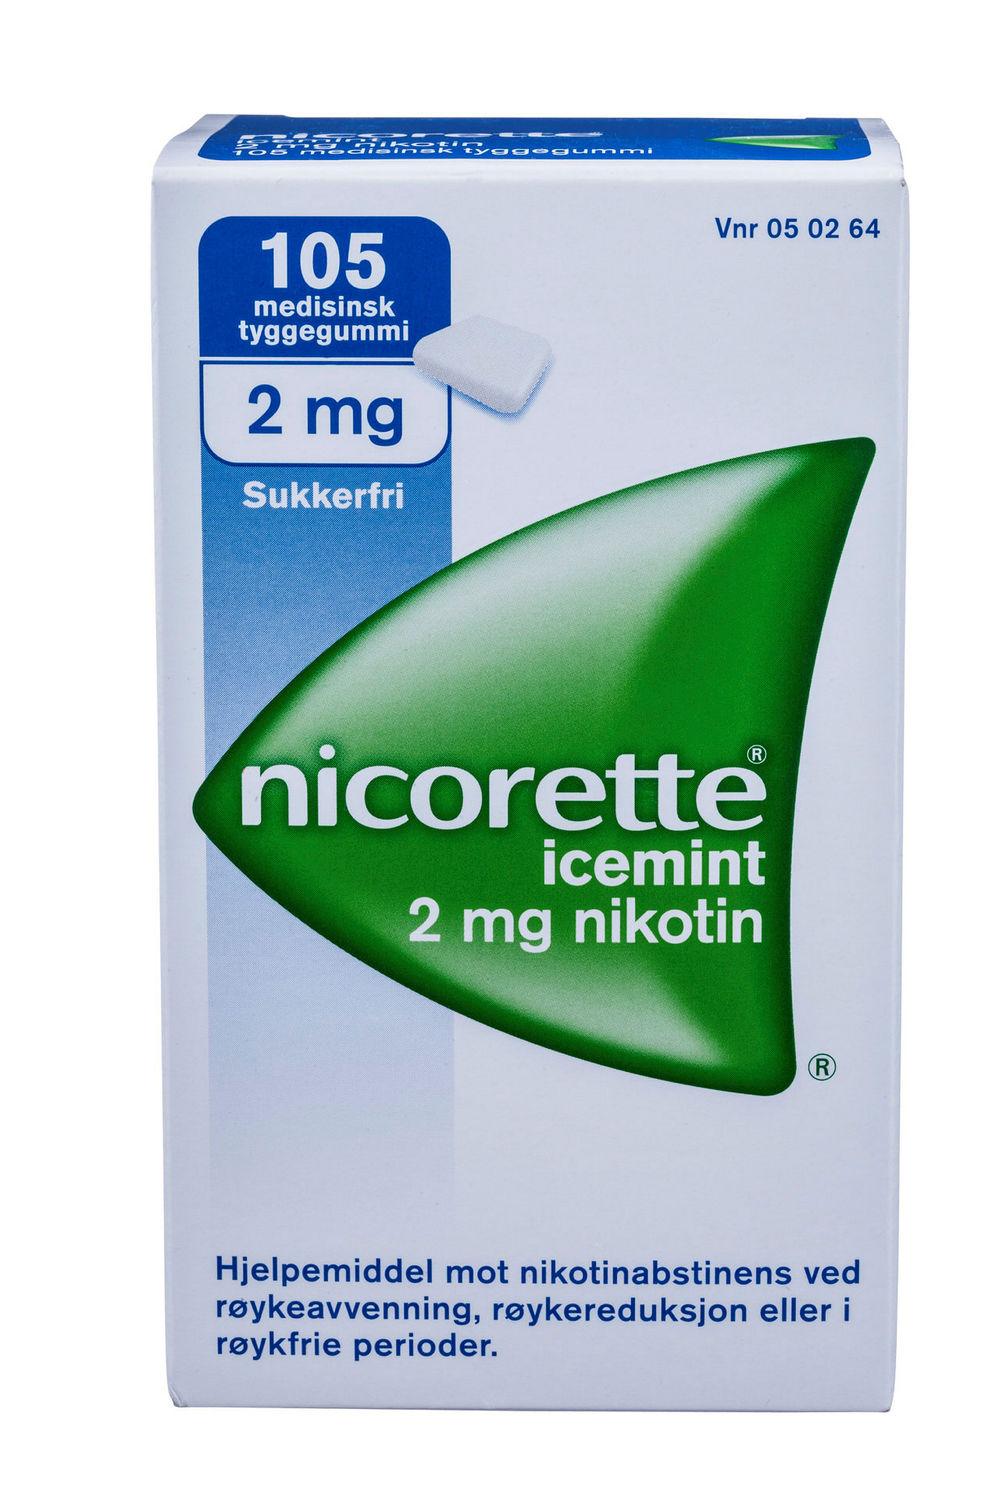 Nicorette Icemint 2mg, 105 stk